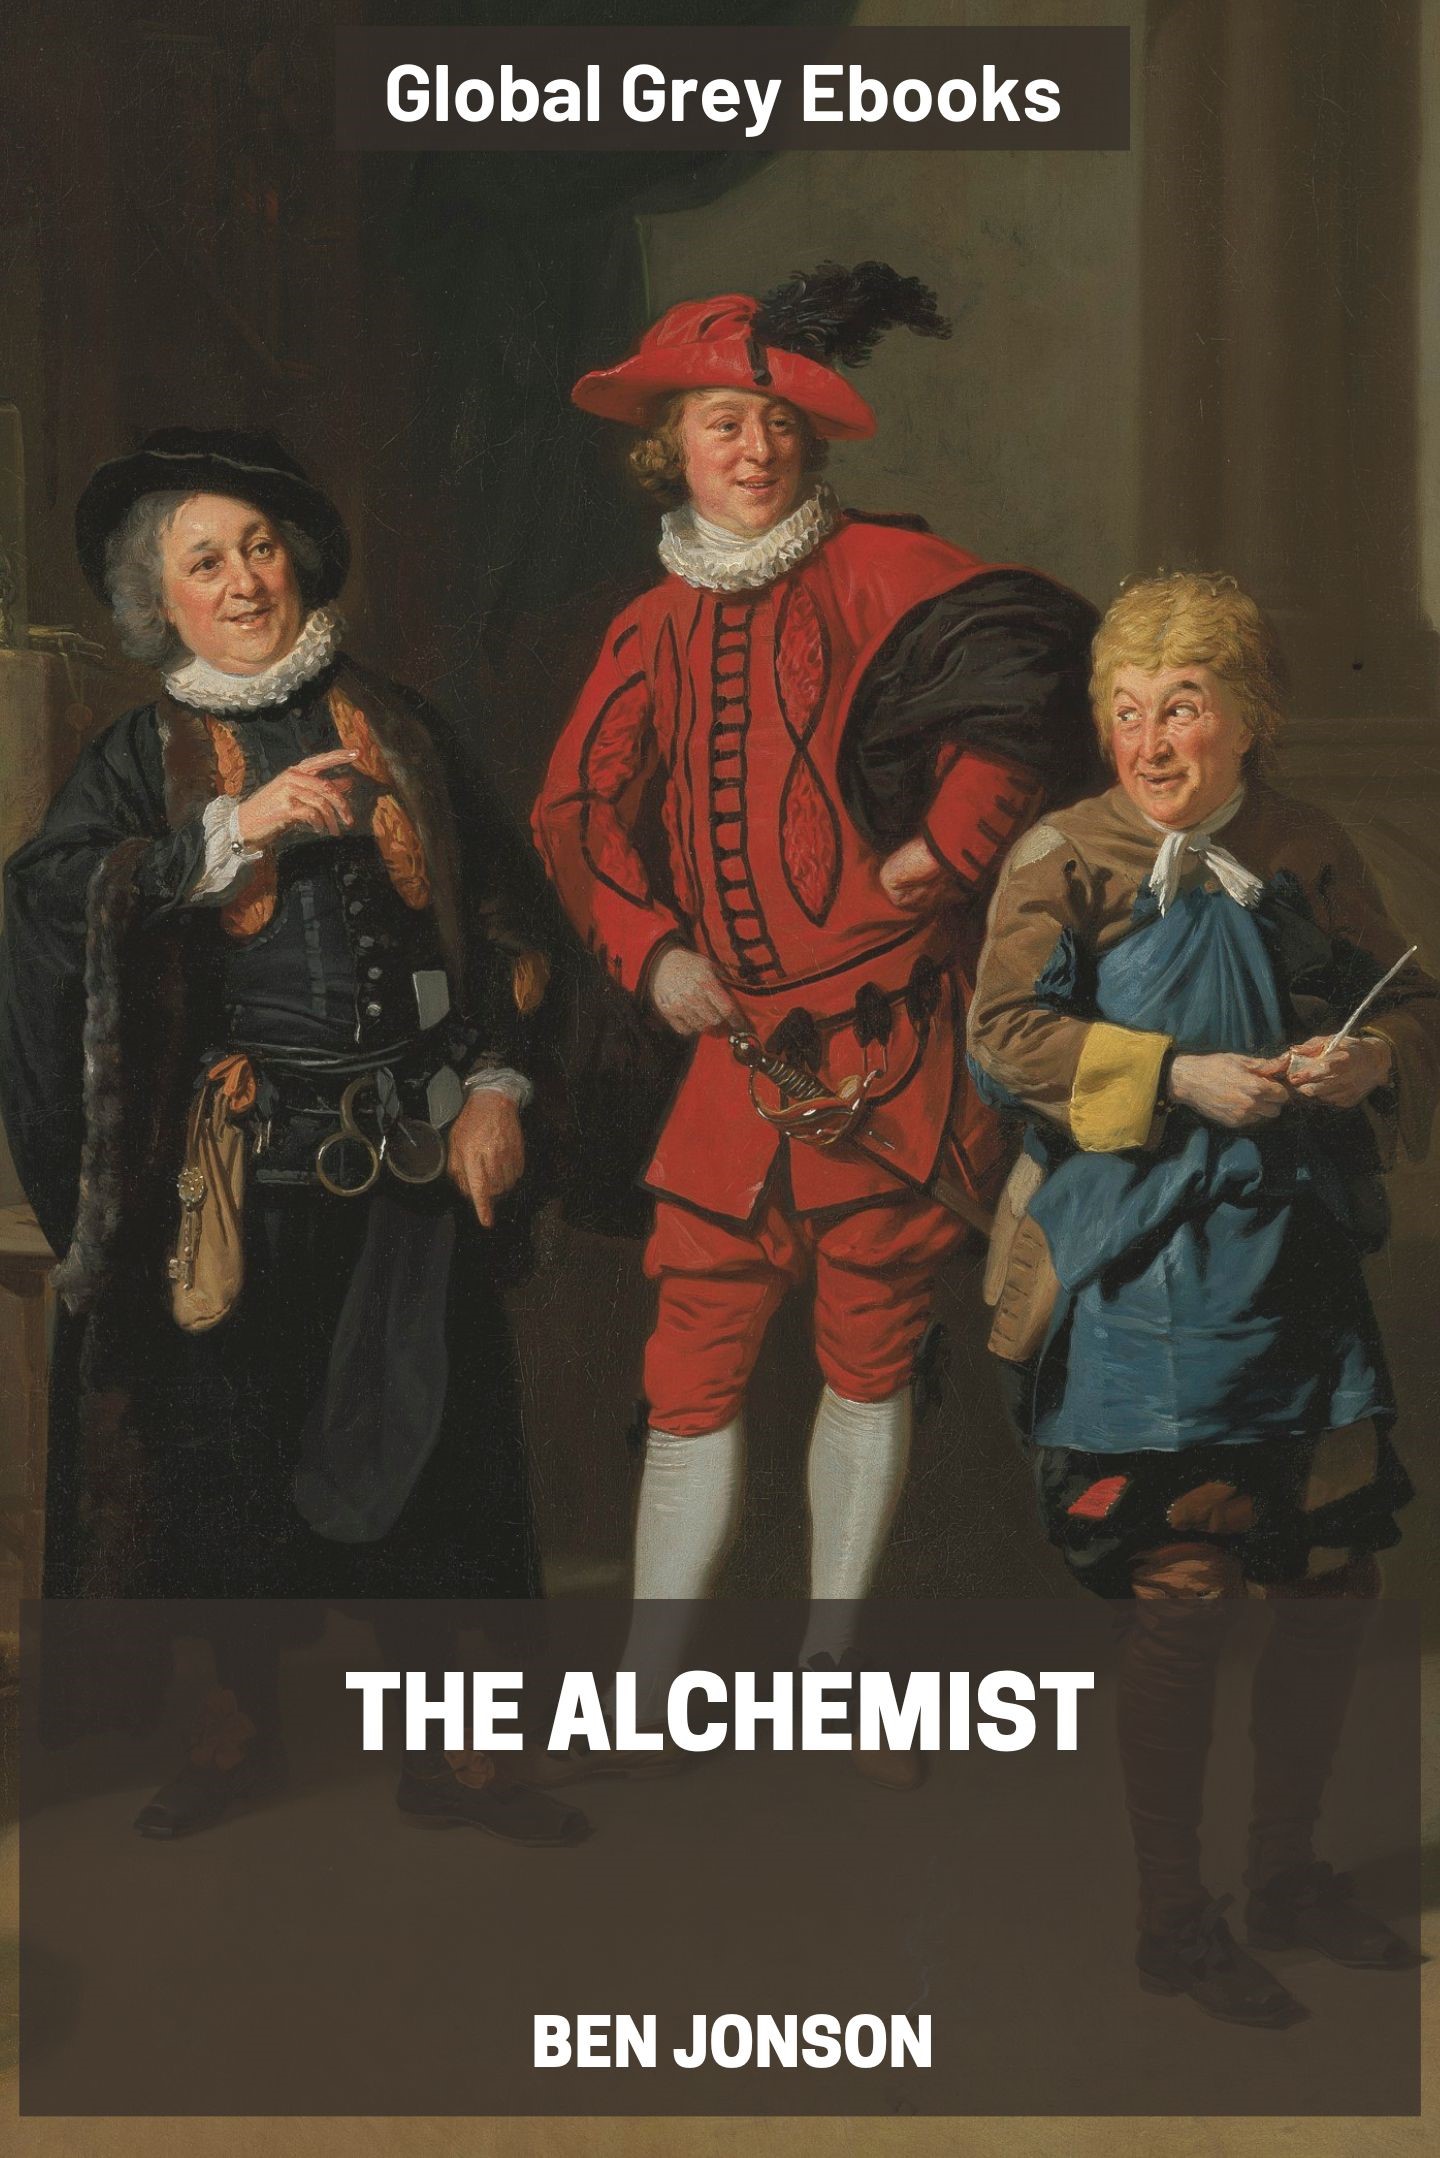 The Alchemist by Ben Jonson - Free ebook - Global Grey ebooks